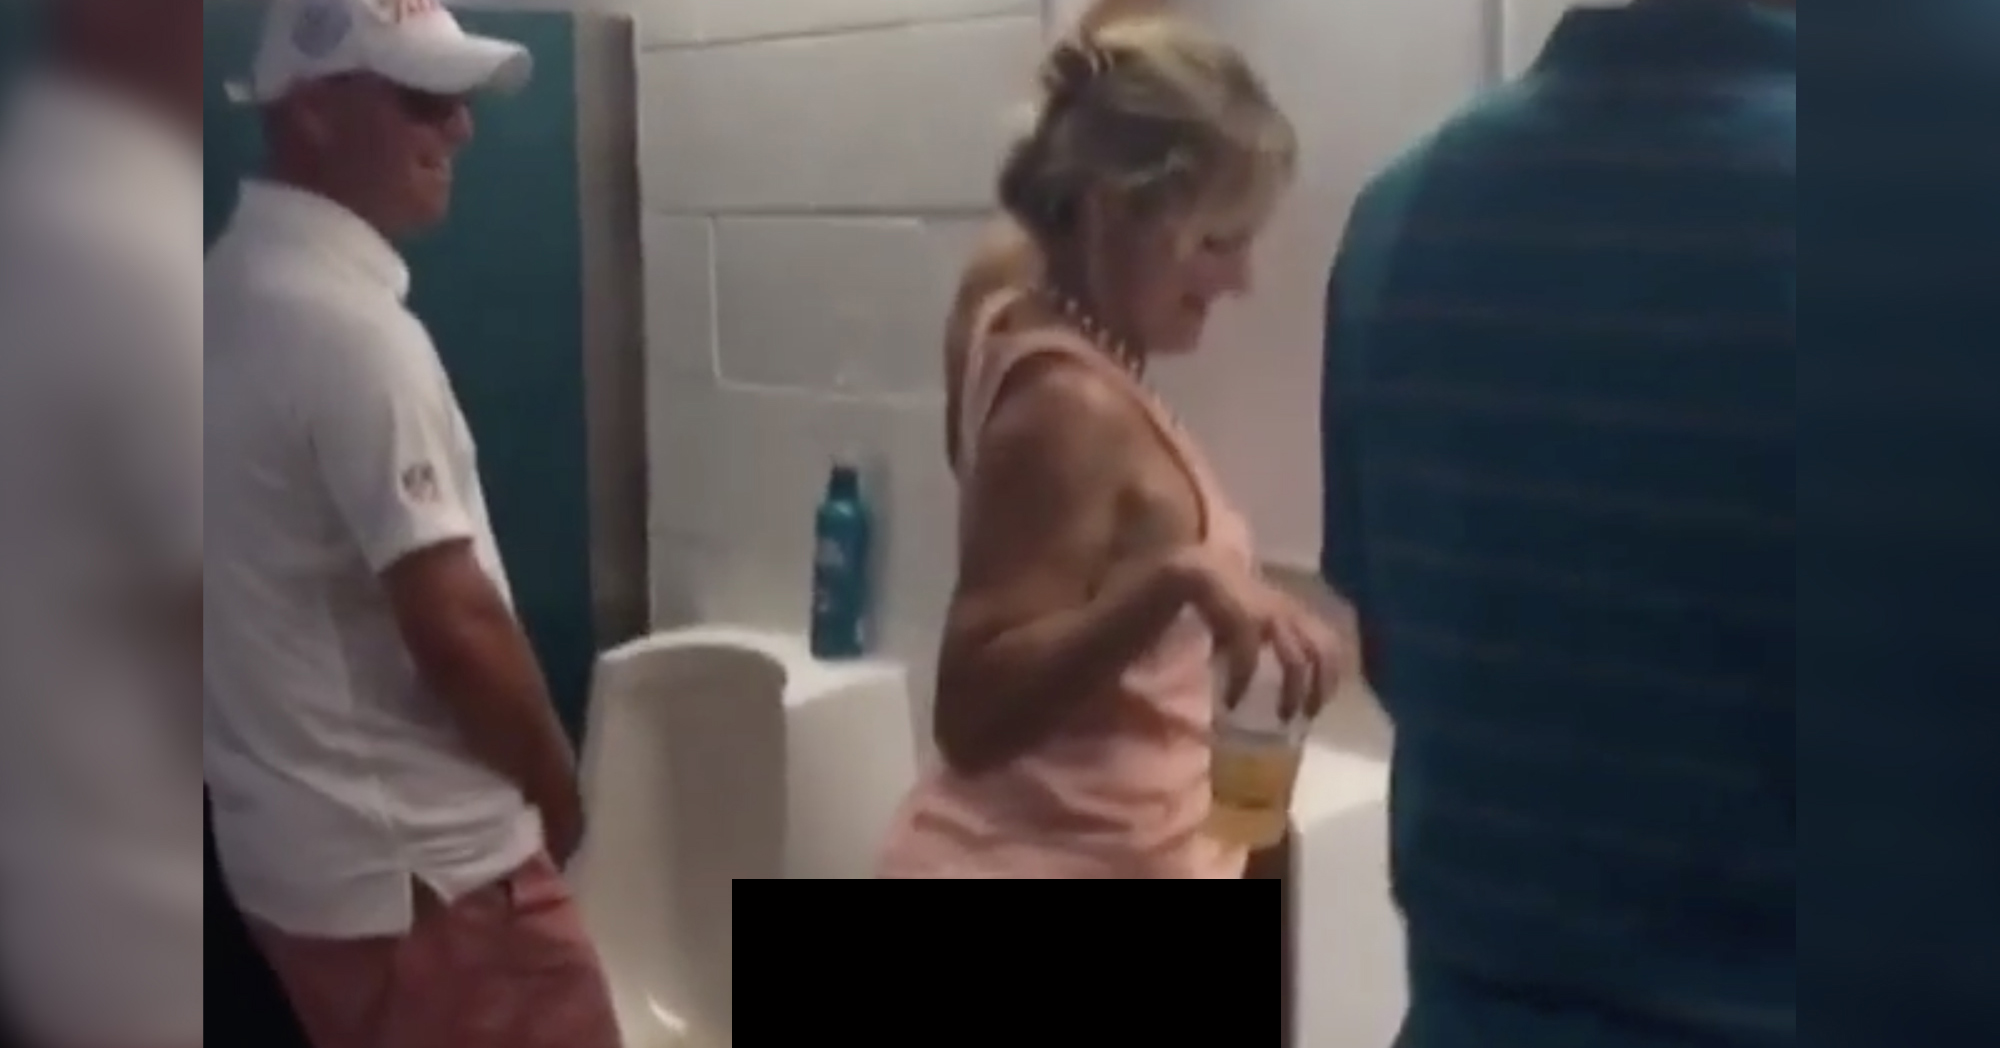 alexius johnson add women peeing in stores photo